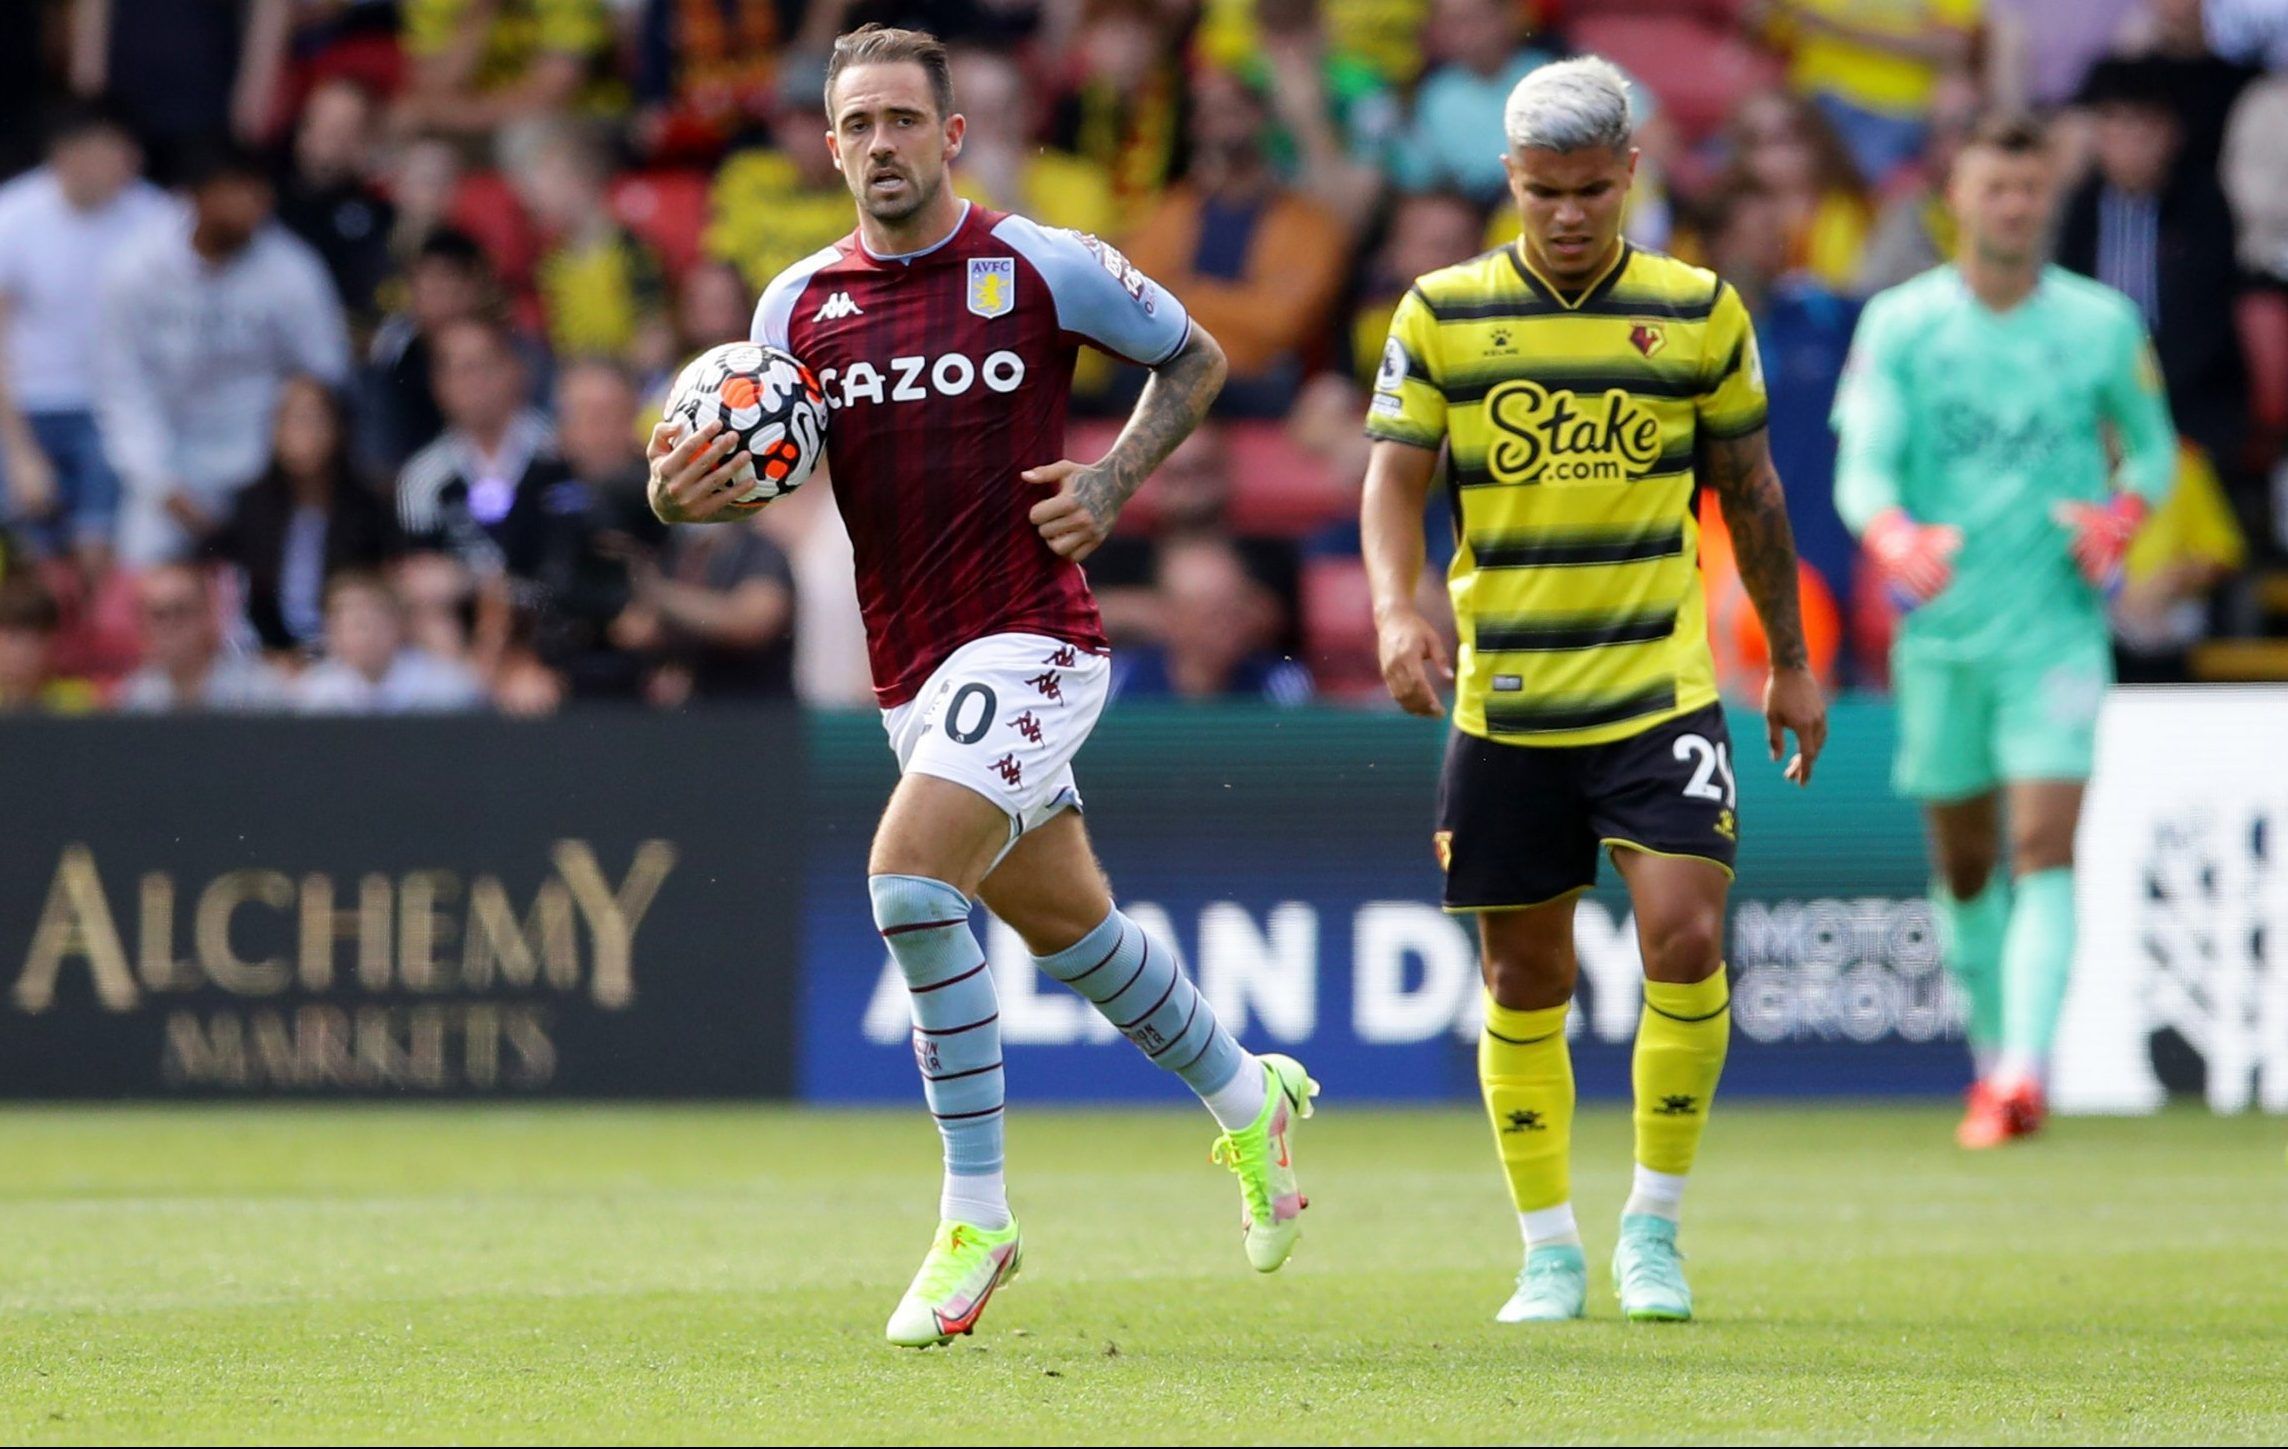 Aston Villa striker Danny Ings celebrates after scoring against Watford in the Premier League